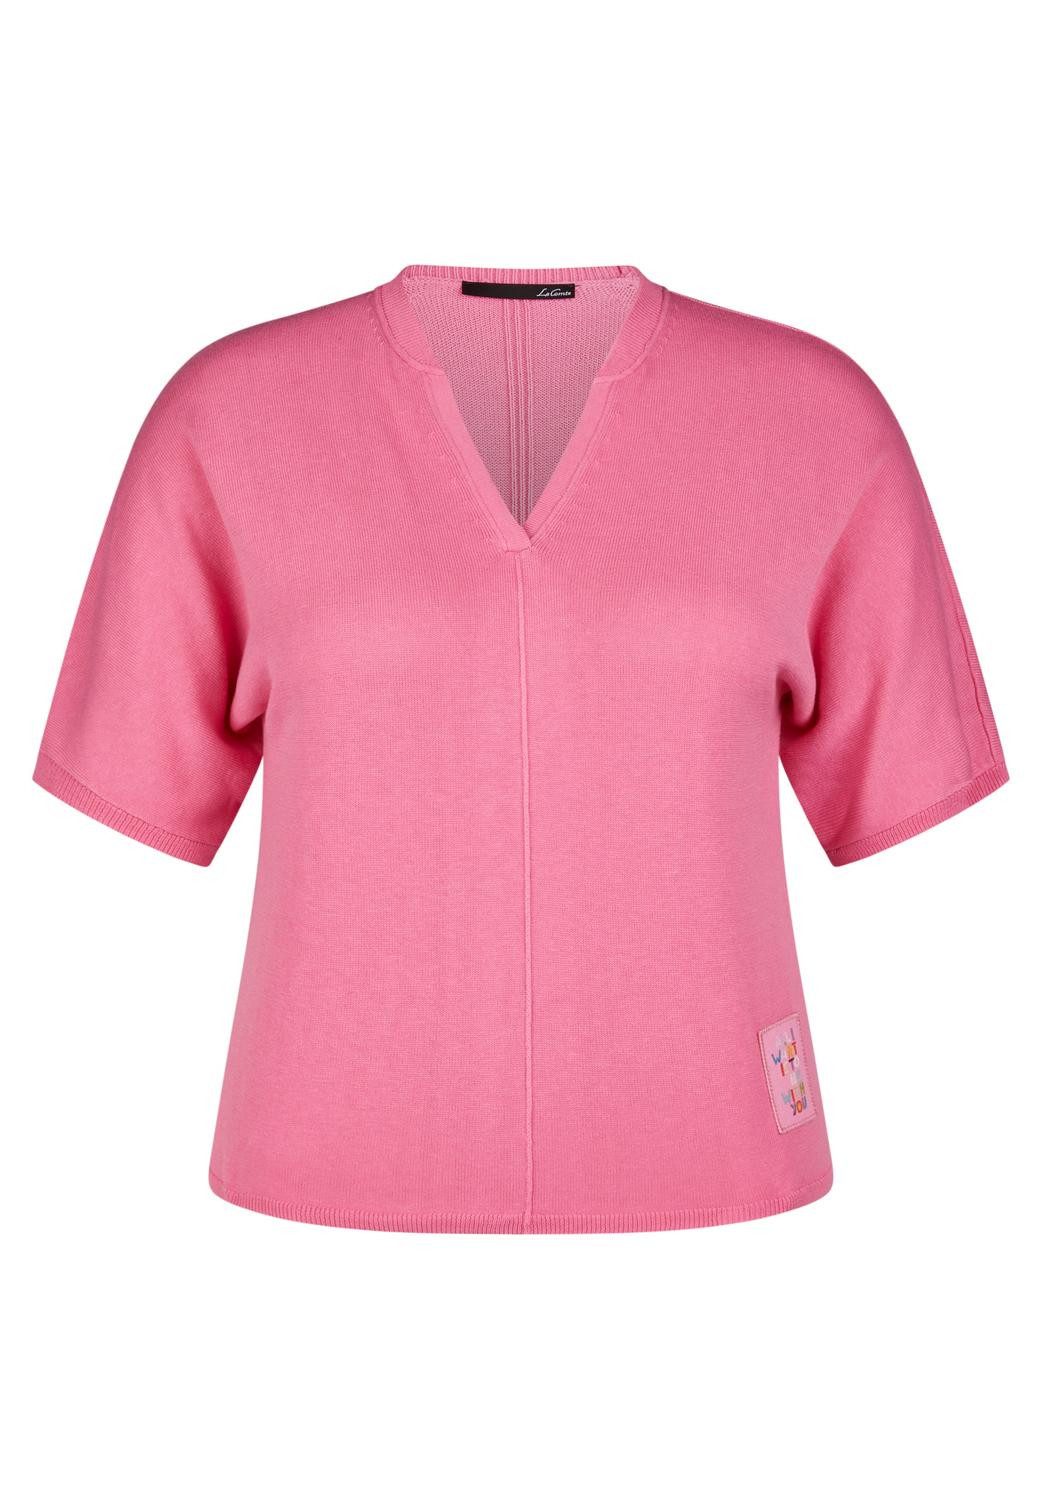 LeComte Sweatshirt Pullover, Pink